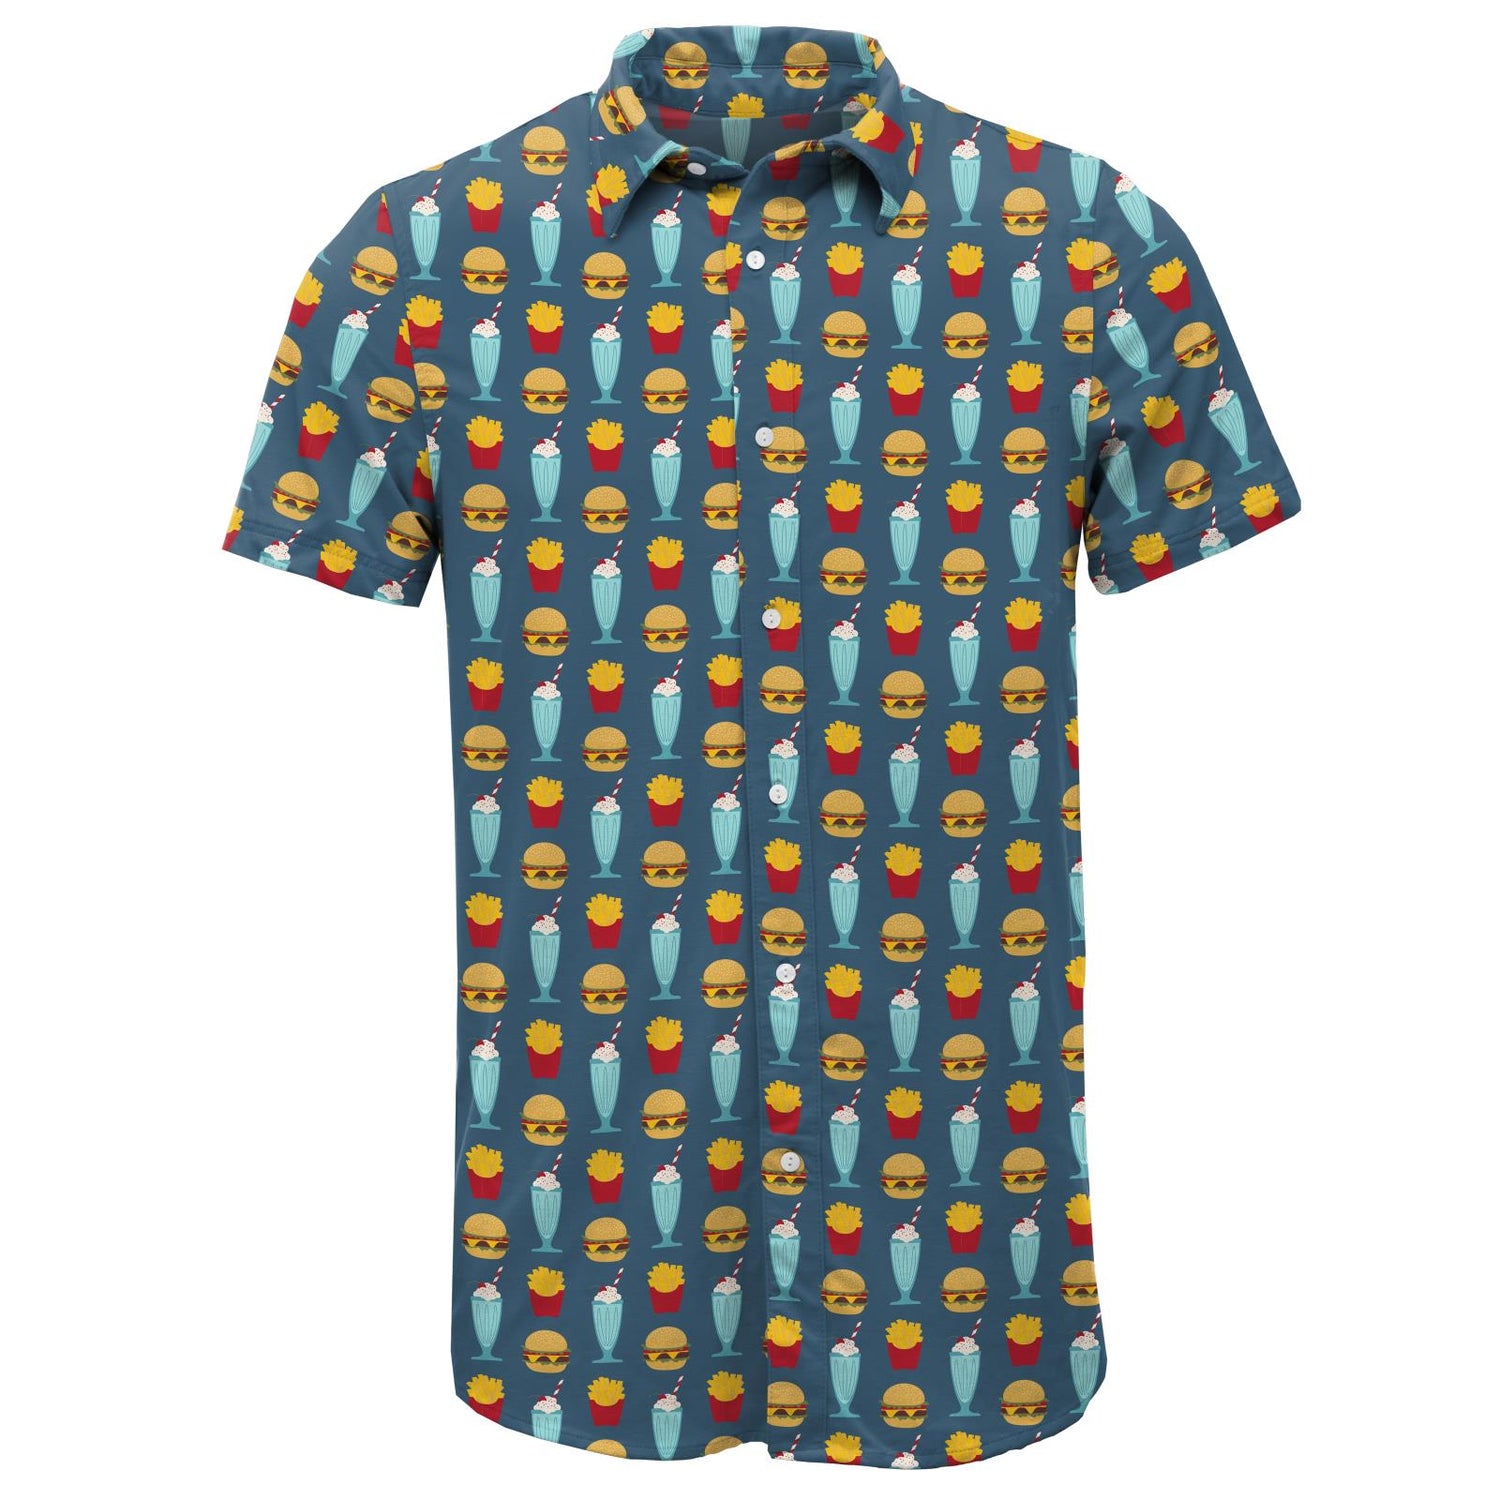 Men's Print Short Sleeve Button Down Shirt in Deep Sea Cheeseburger